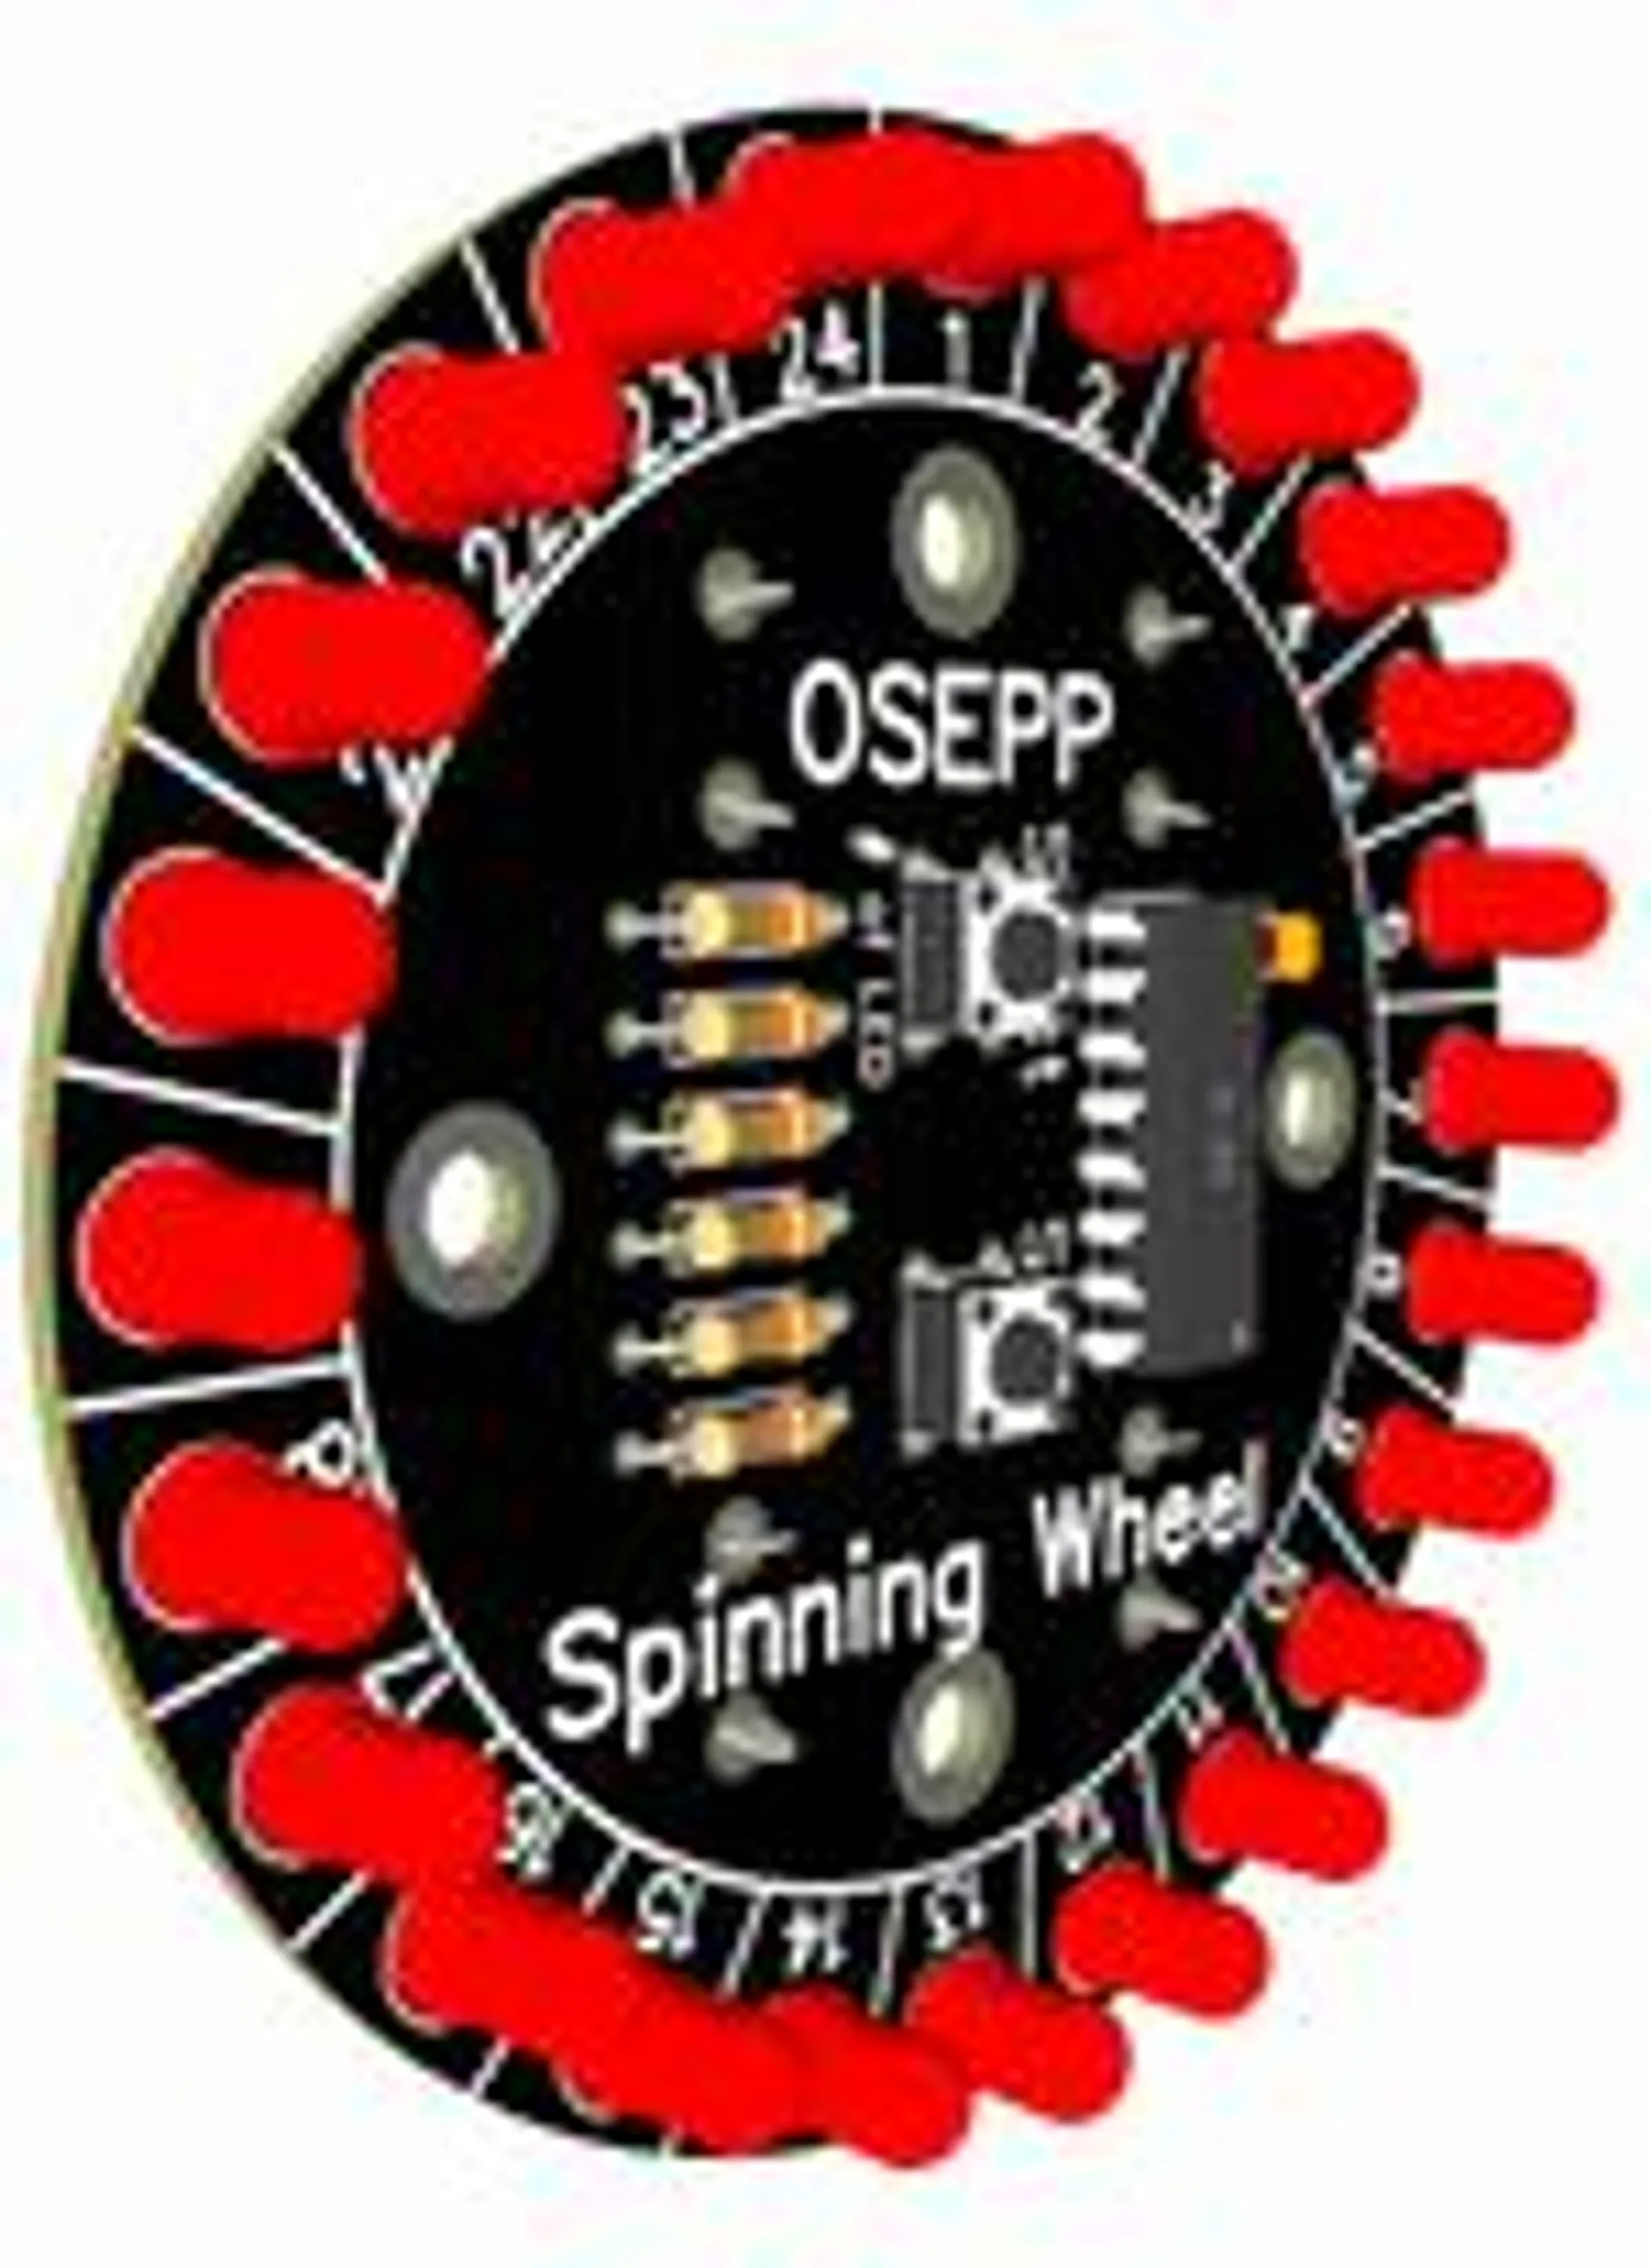 OSEPP Spinning Wheel DIY Solder Kit